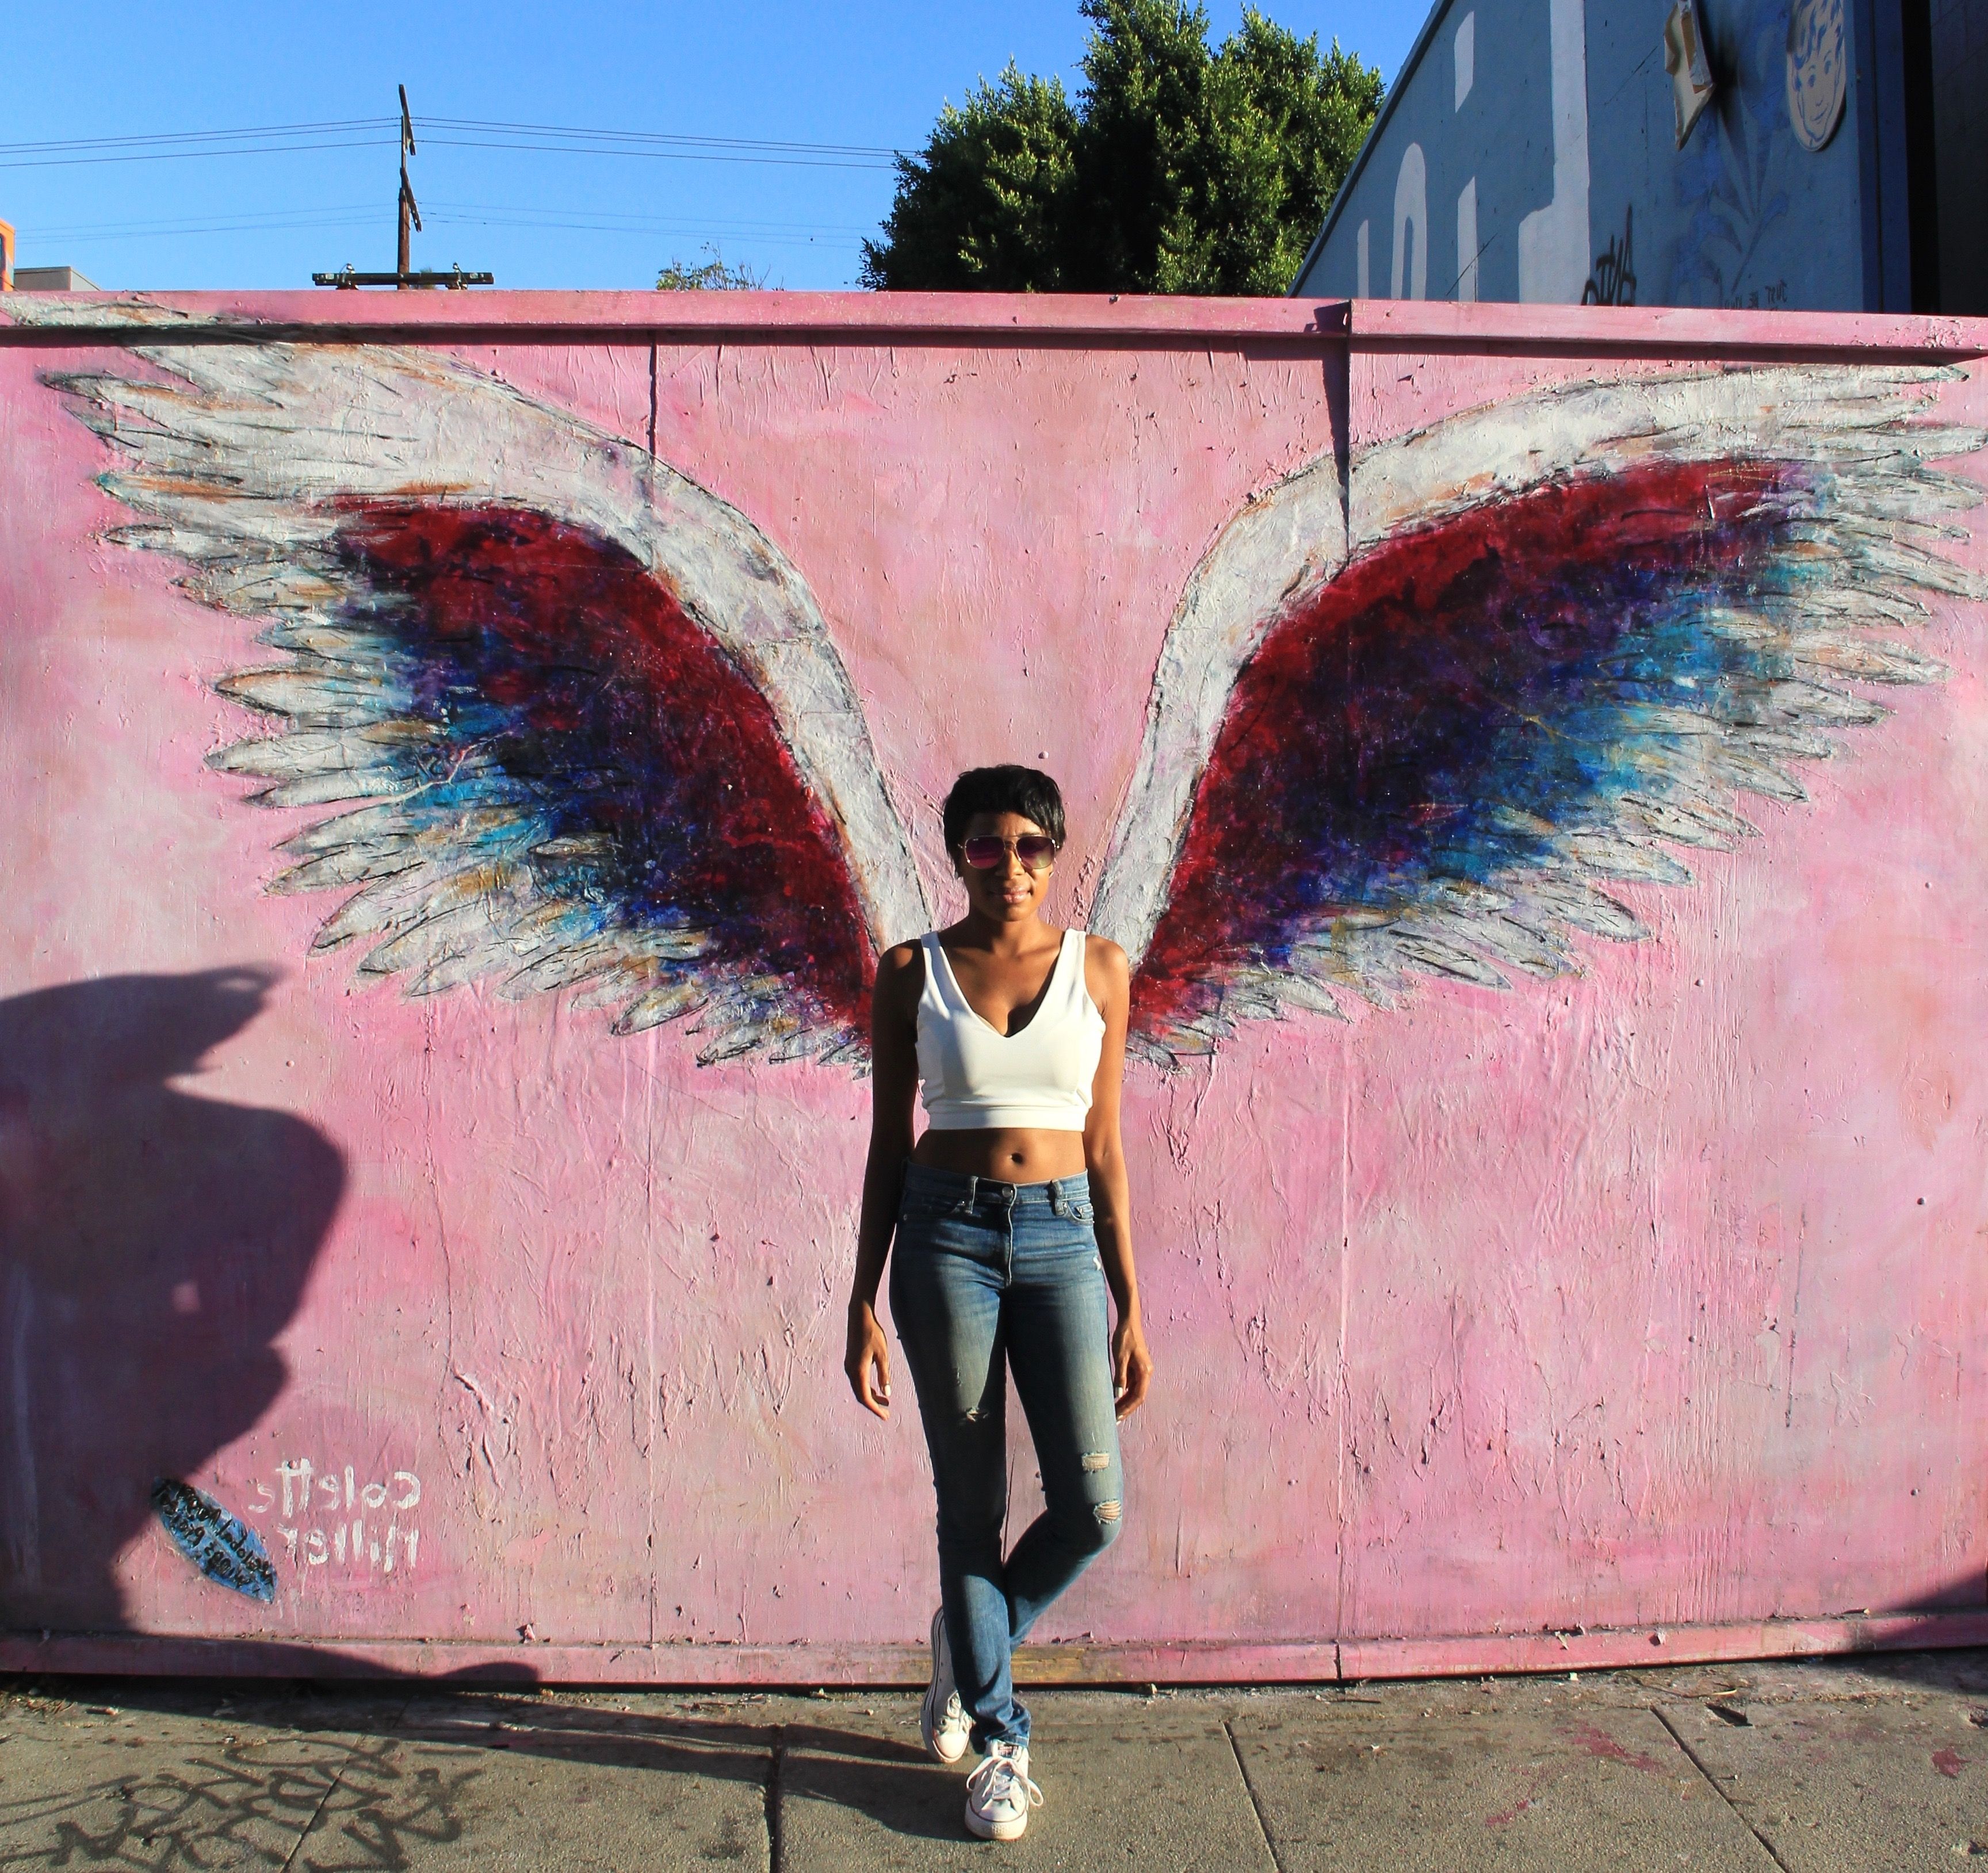 Melrosewallsla Nice Wall Popular Wall Art Los Angeles – Wall For Most Recent Los Angeles Wall Art (Photo 7 of 15)